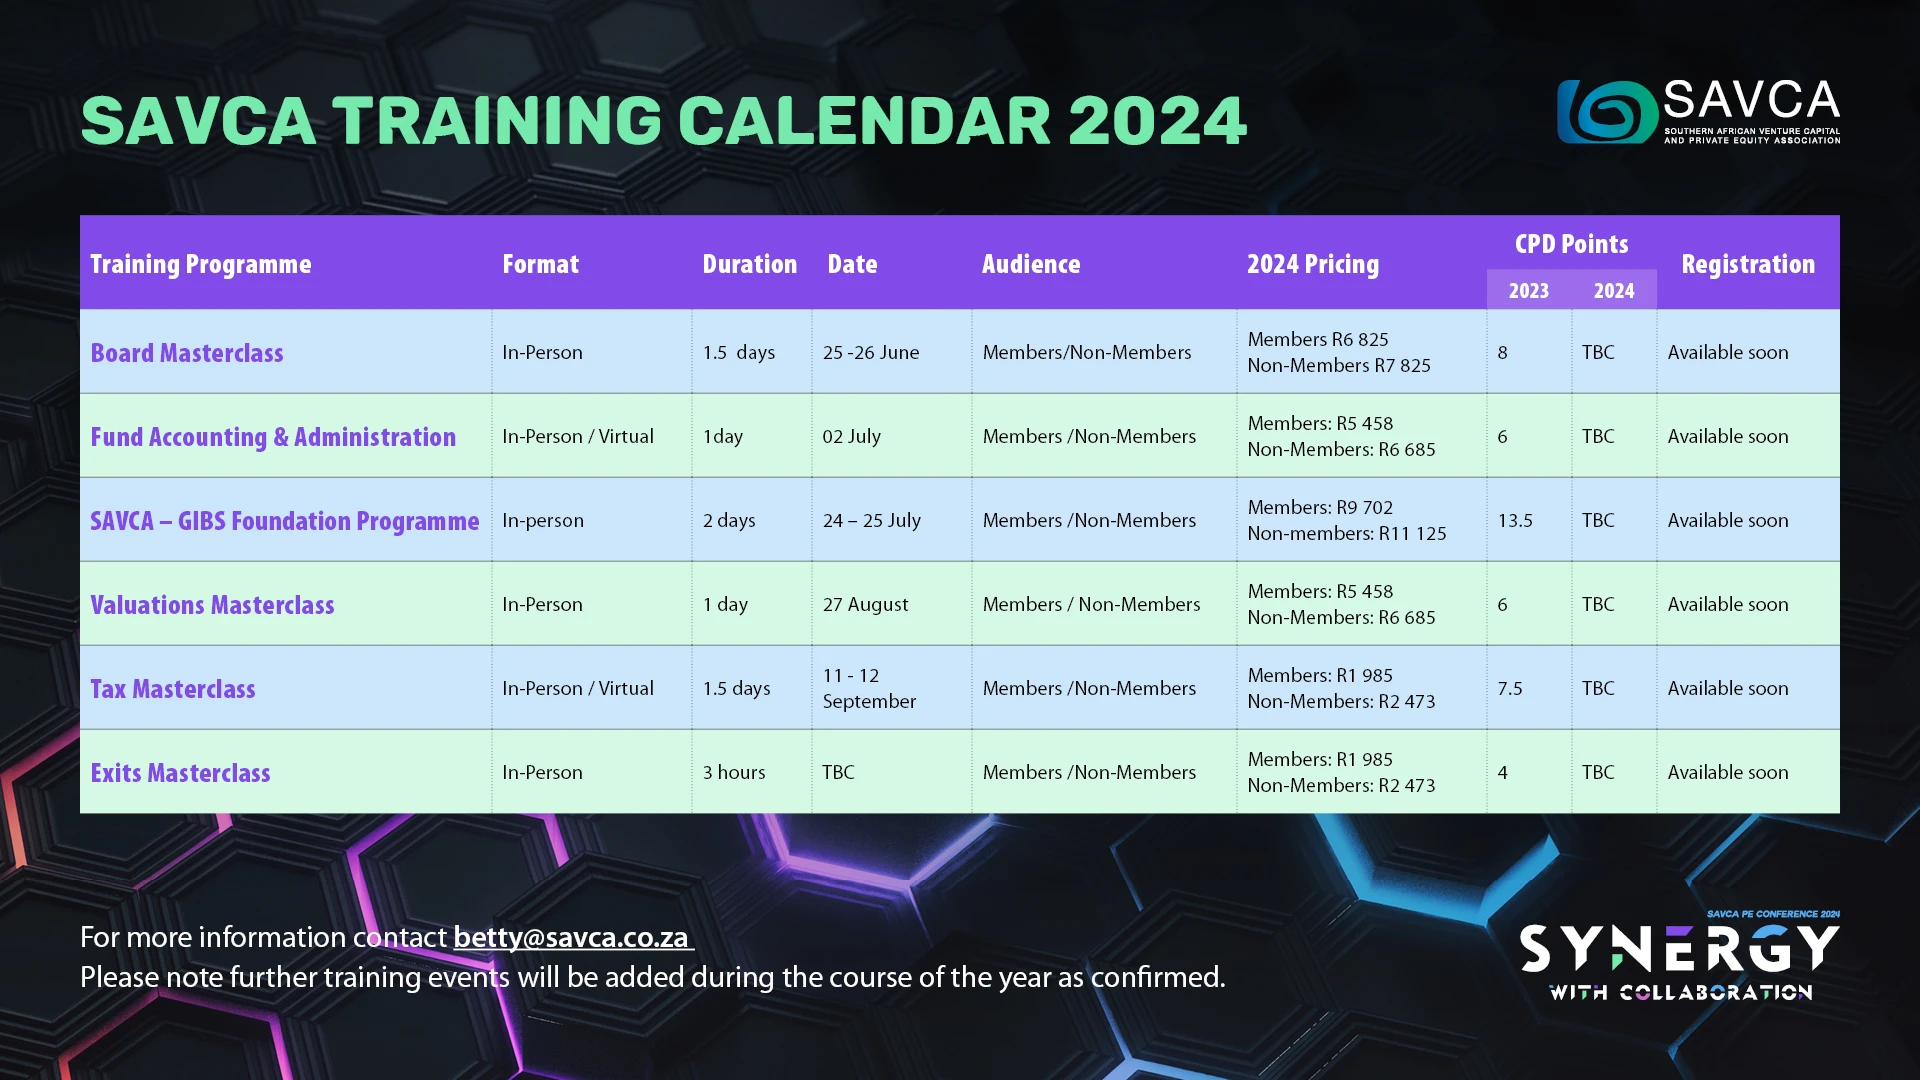 SAVCA Training Calendar 2024